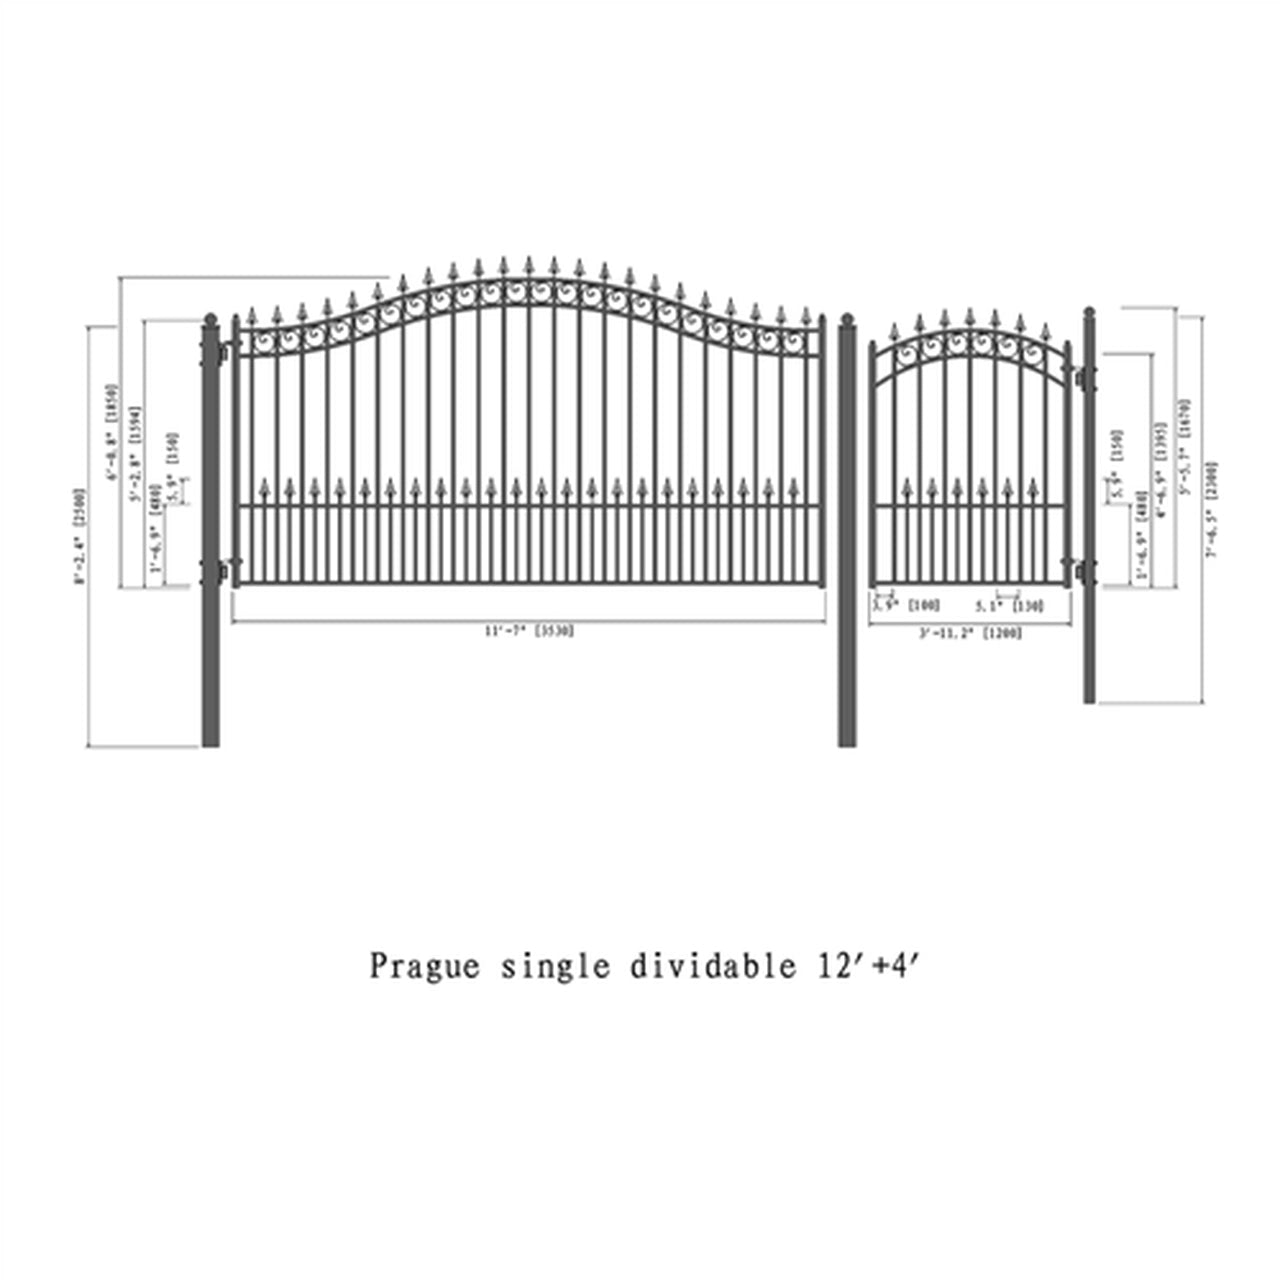 Aleko Steel Single Swing Driveway Gate - PRAGUE Style - 12 ft with Pedestrian Gate - 5 ft